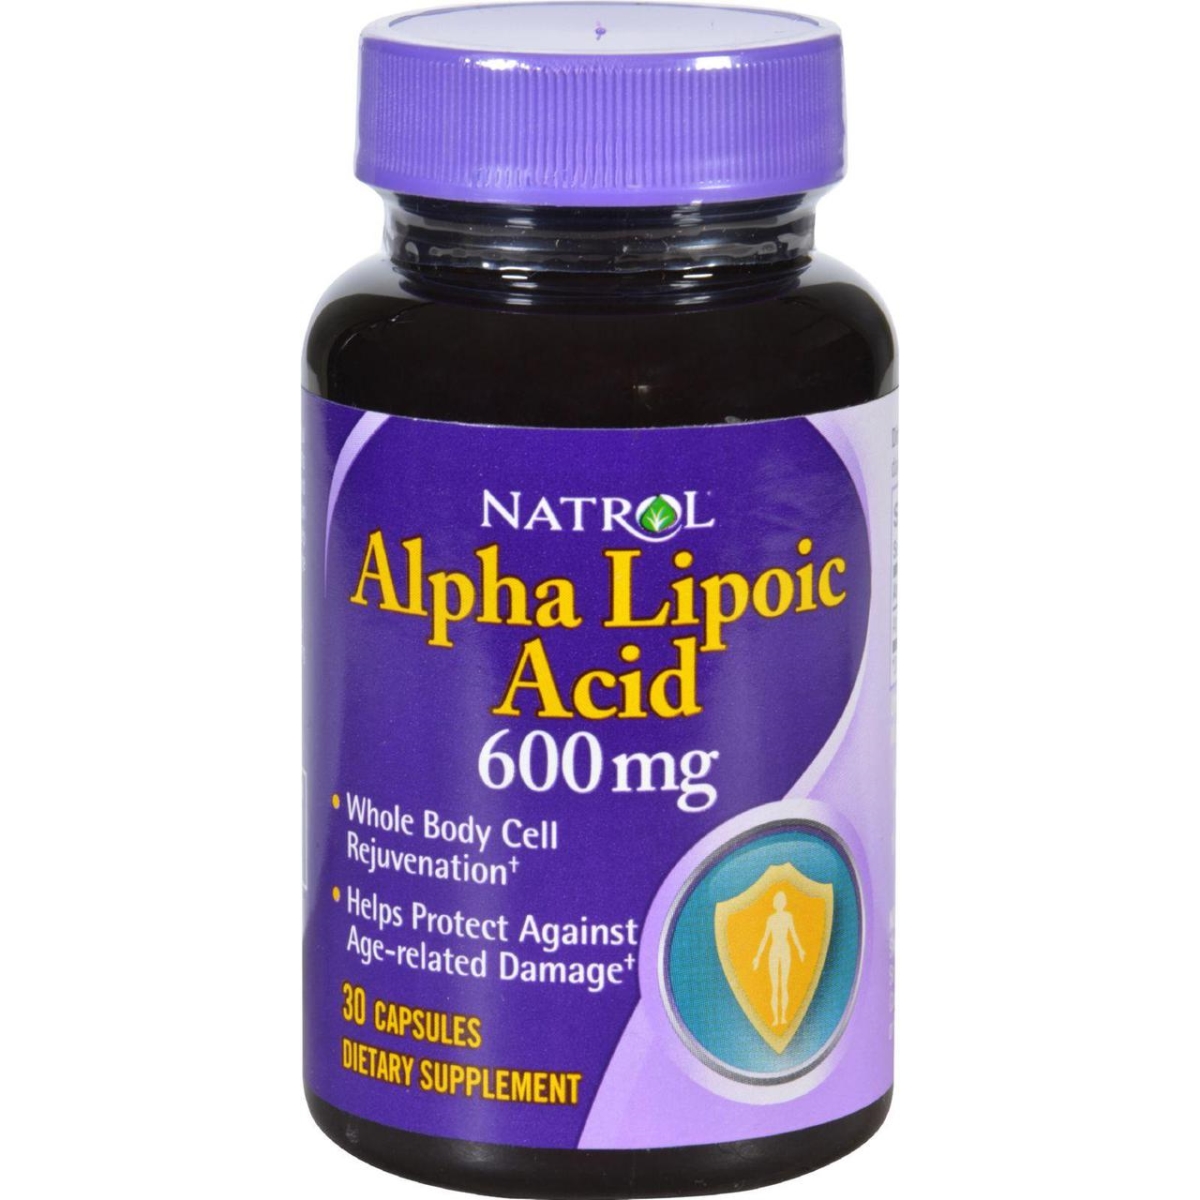 Hg0600395 600 Mg Alpha Lipoic Acid - 30 Capsules